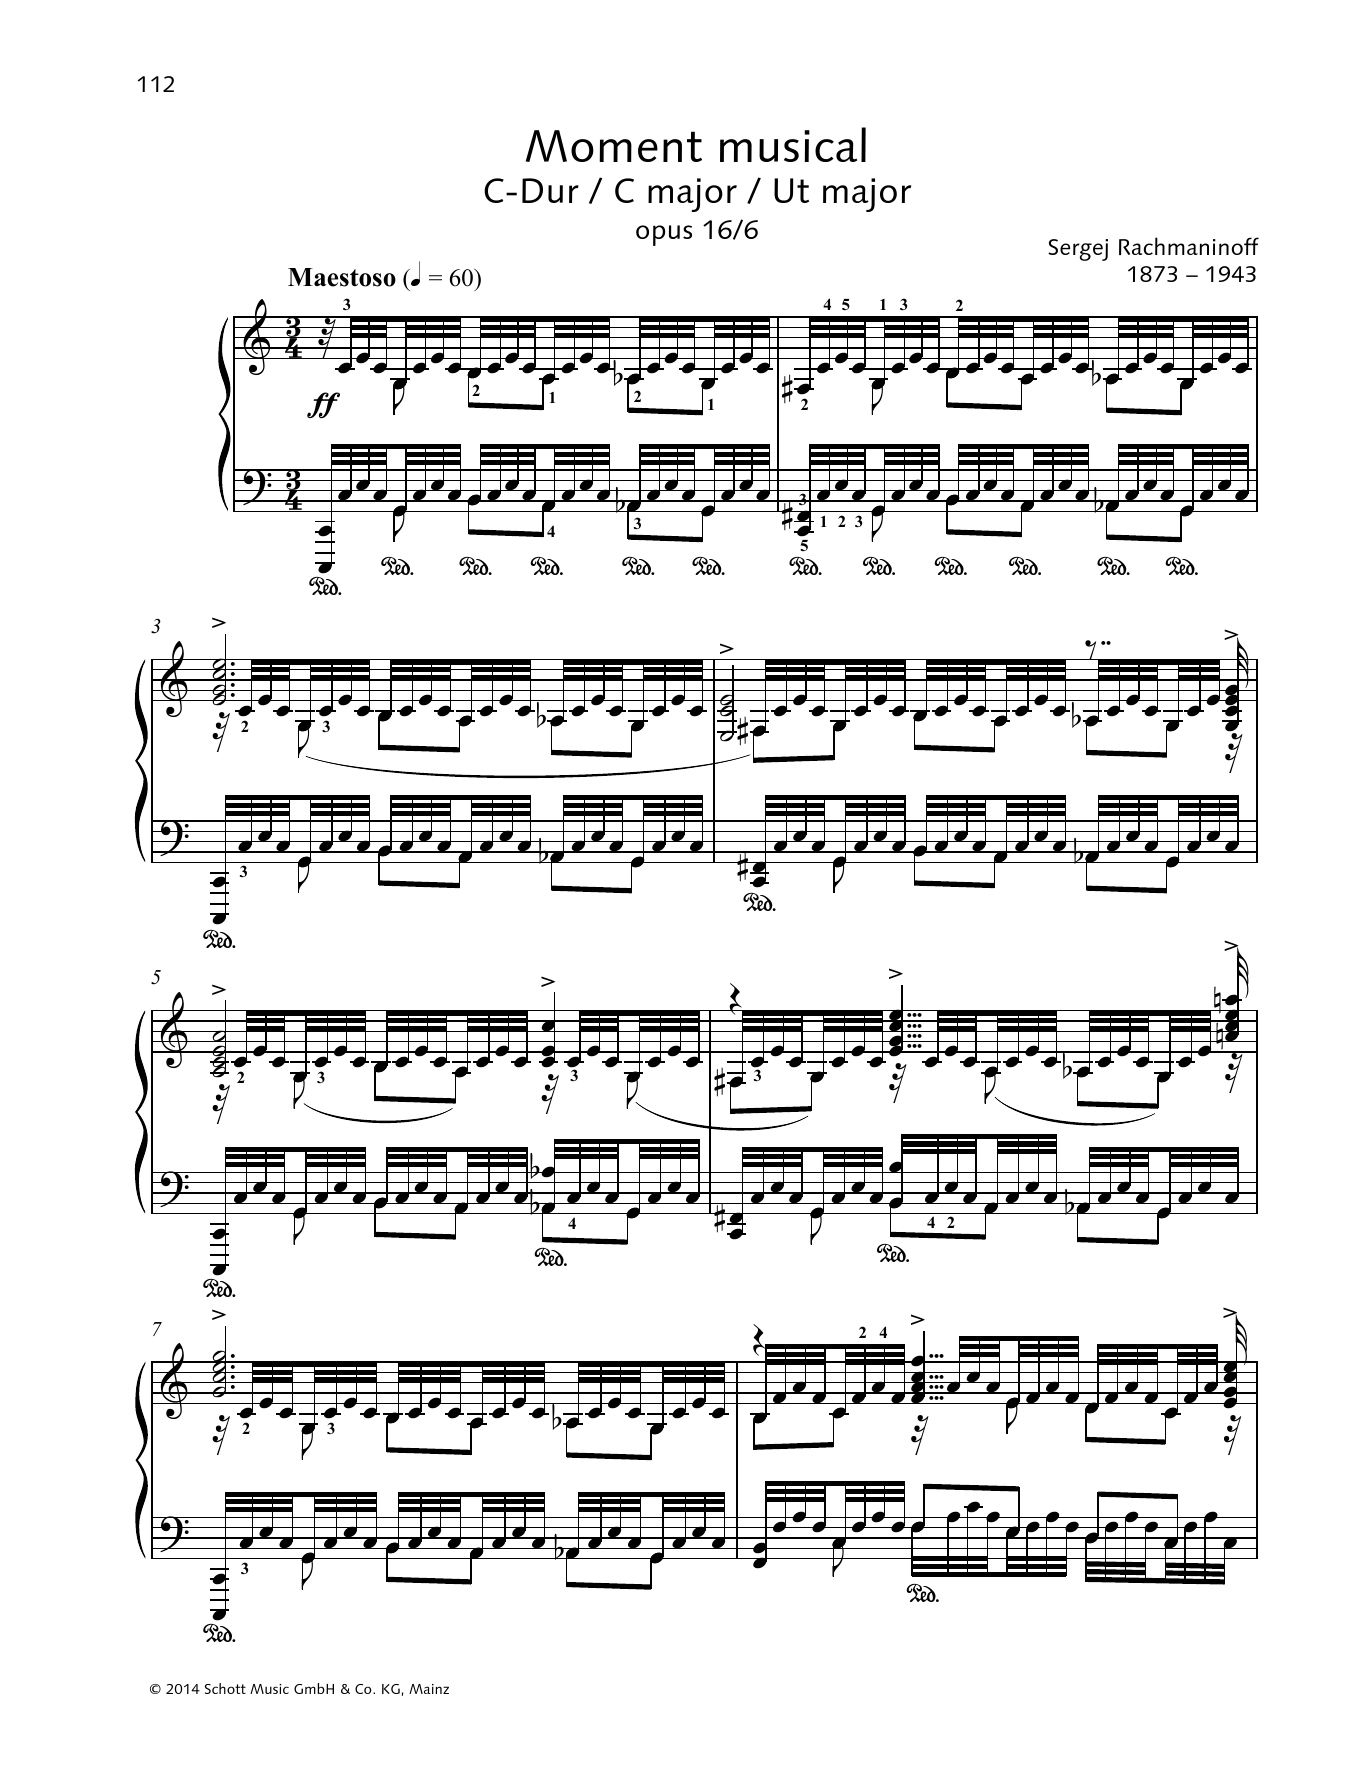 Download Sergei Rachmaninoff Moment Musical Sheet Music